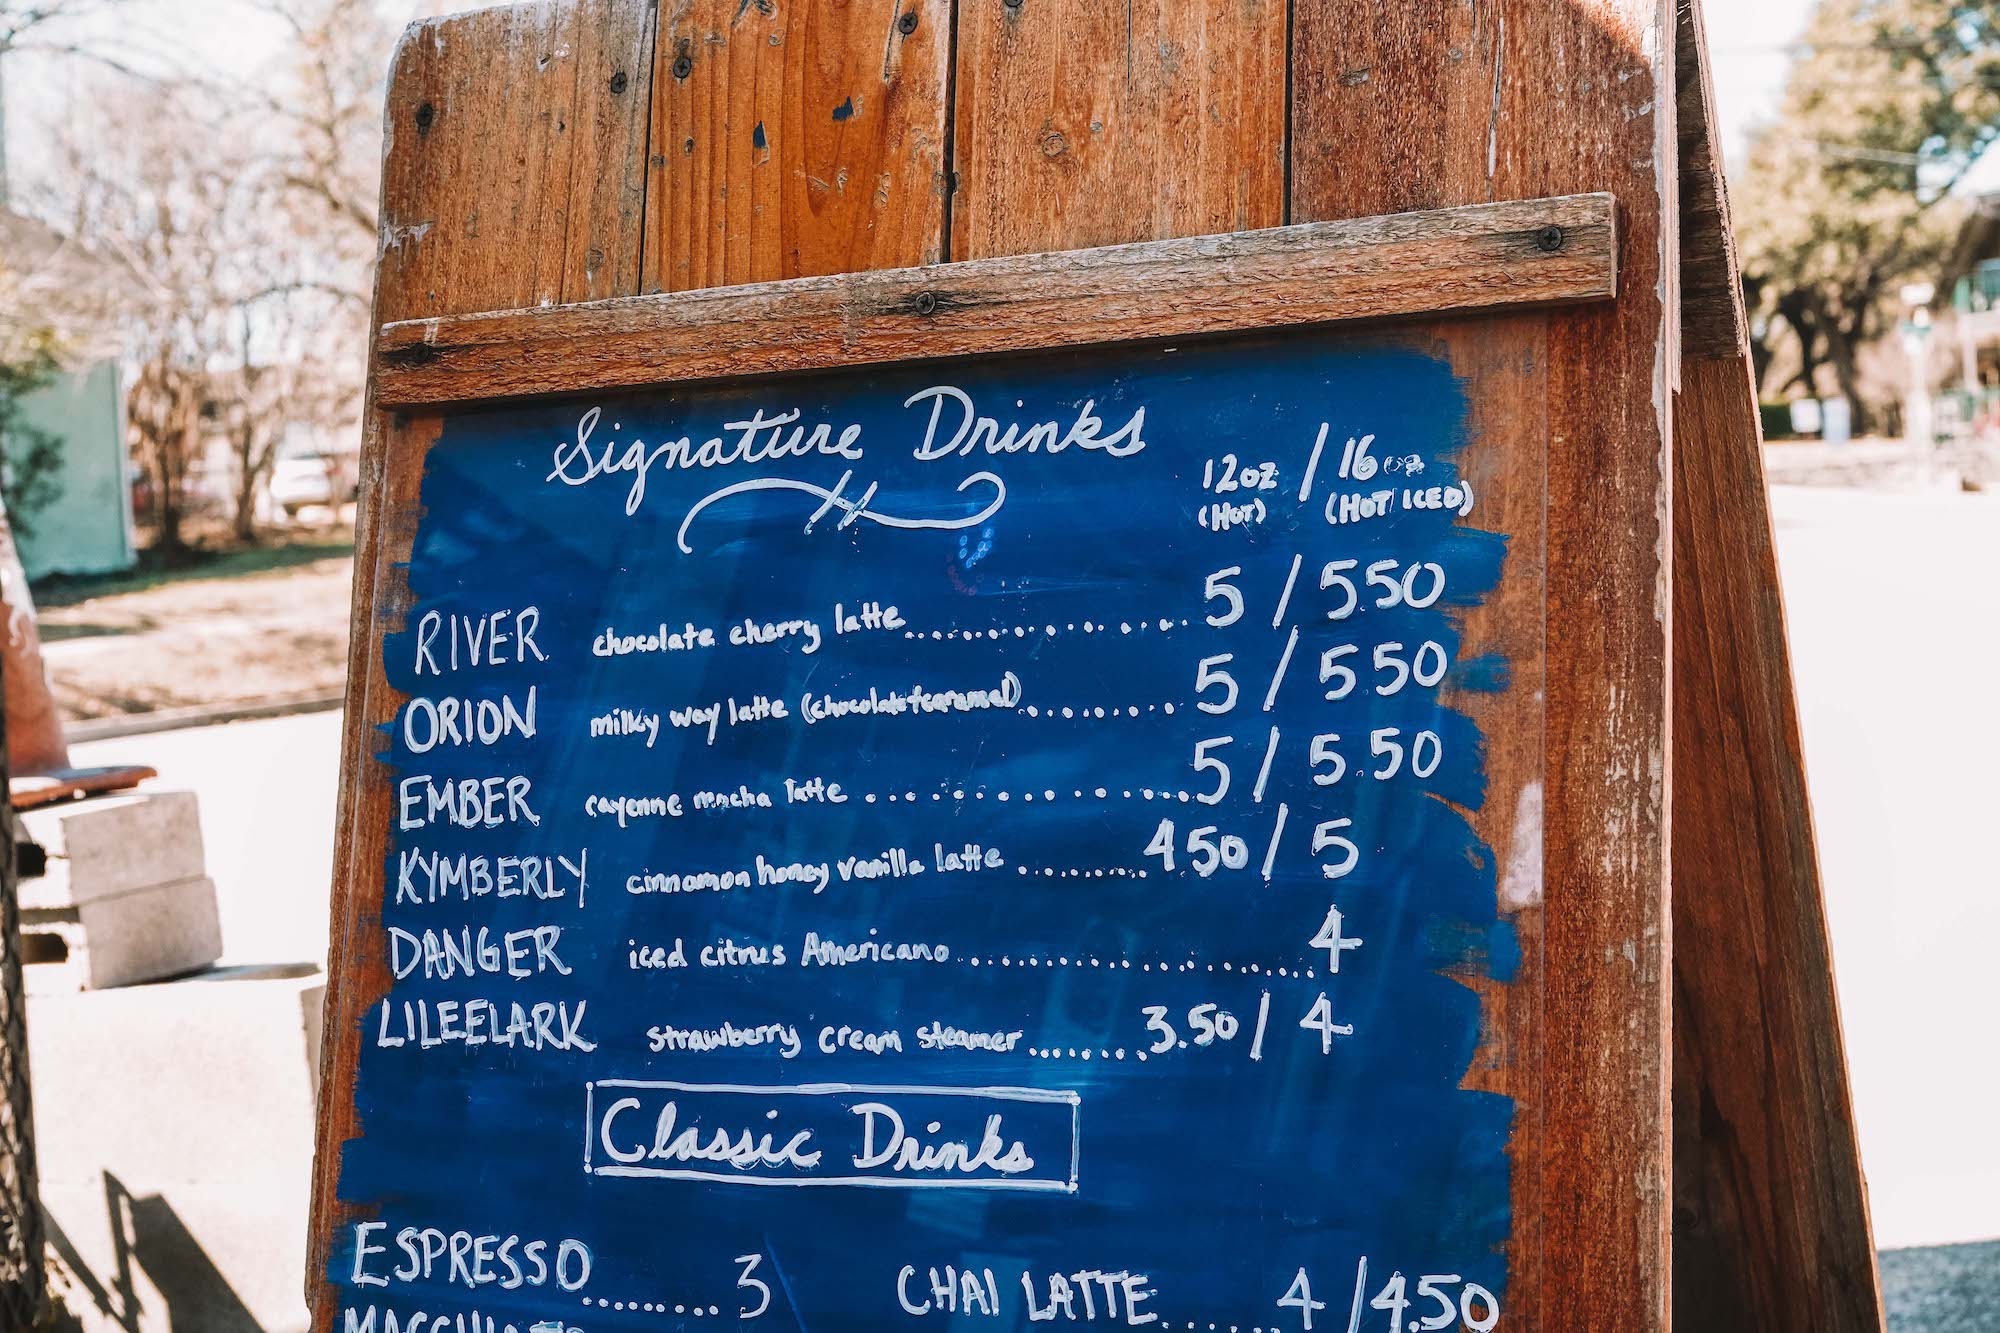 A menu shows specialty drinks.